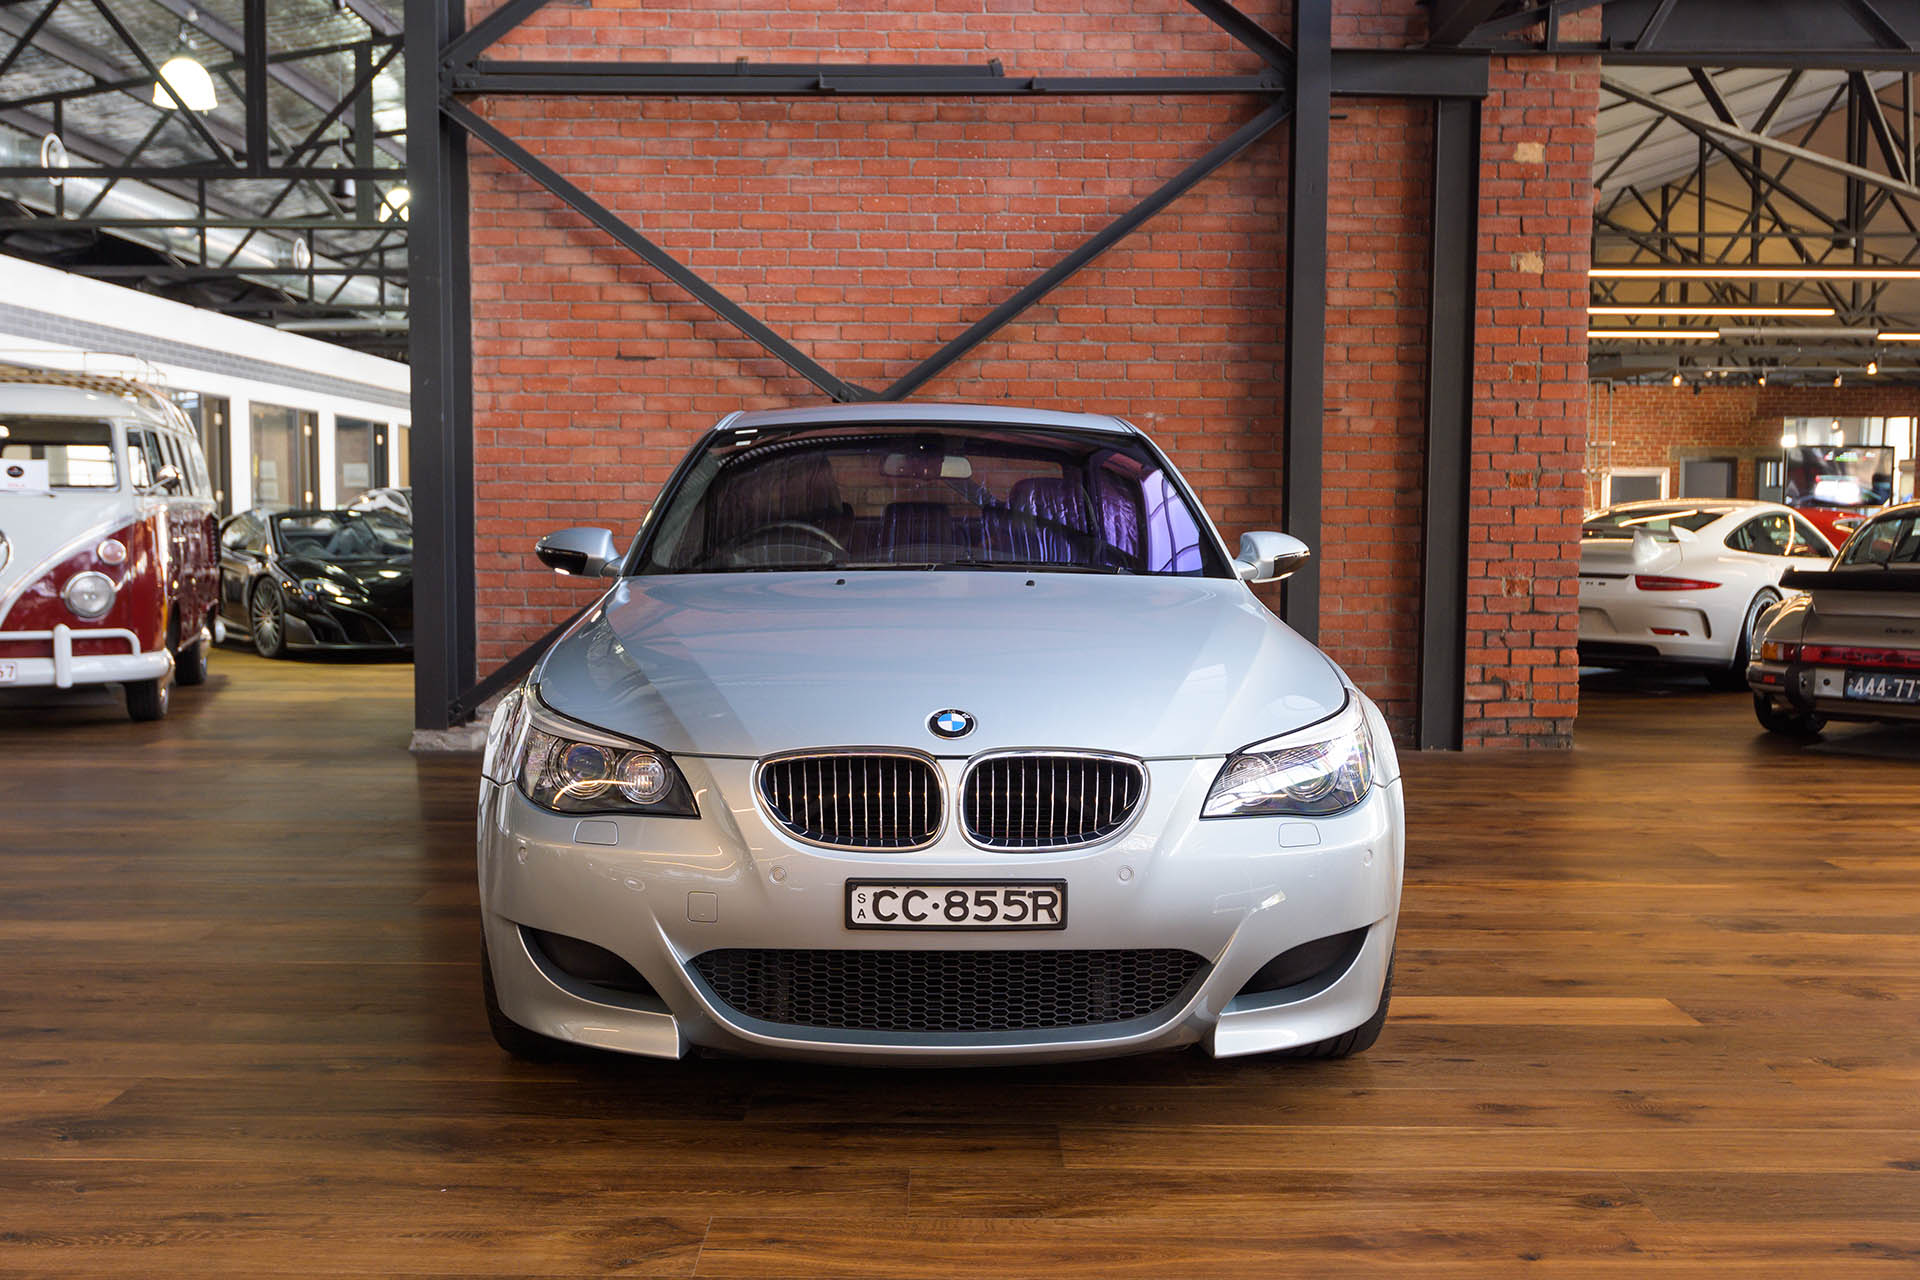 BMW M5 Black cars for sale in Australia 